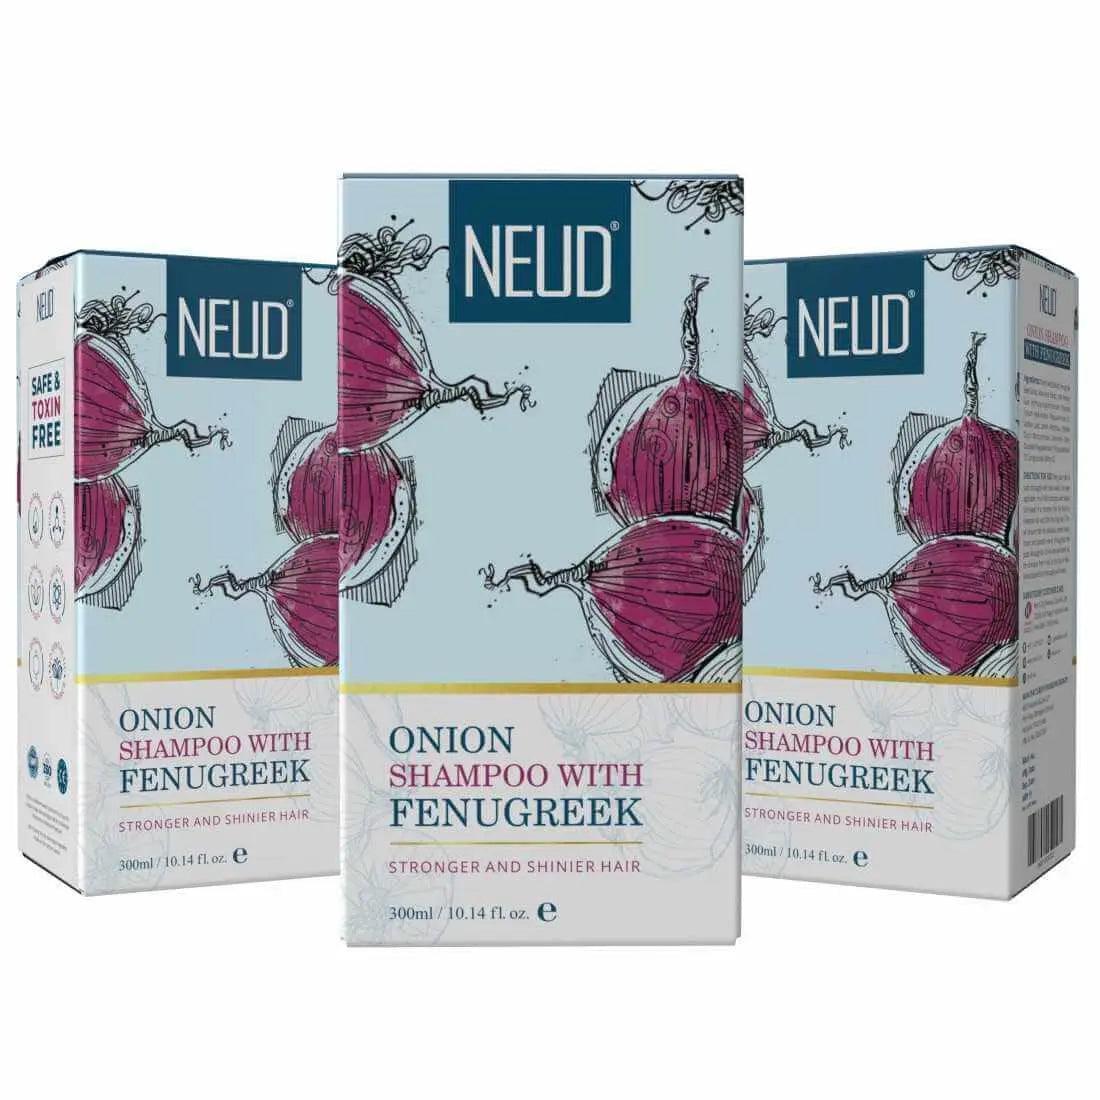 NEUD Premium Onion Hair Shampoo with Fenugreek for Men & Women - 300 ml 9559682305978